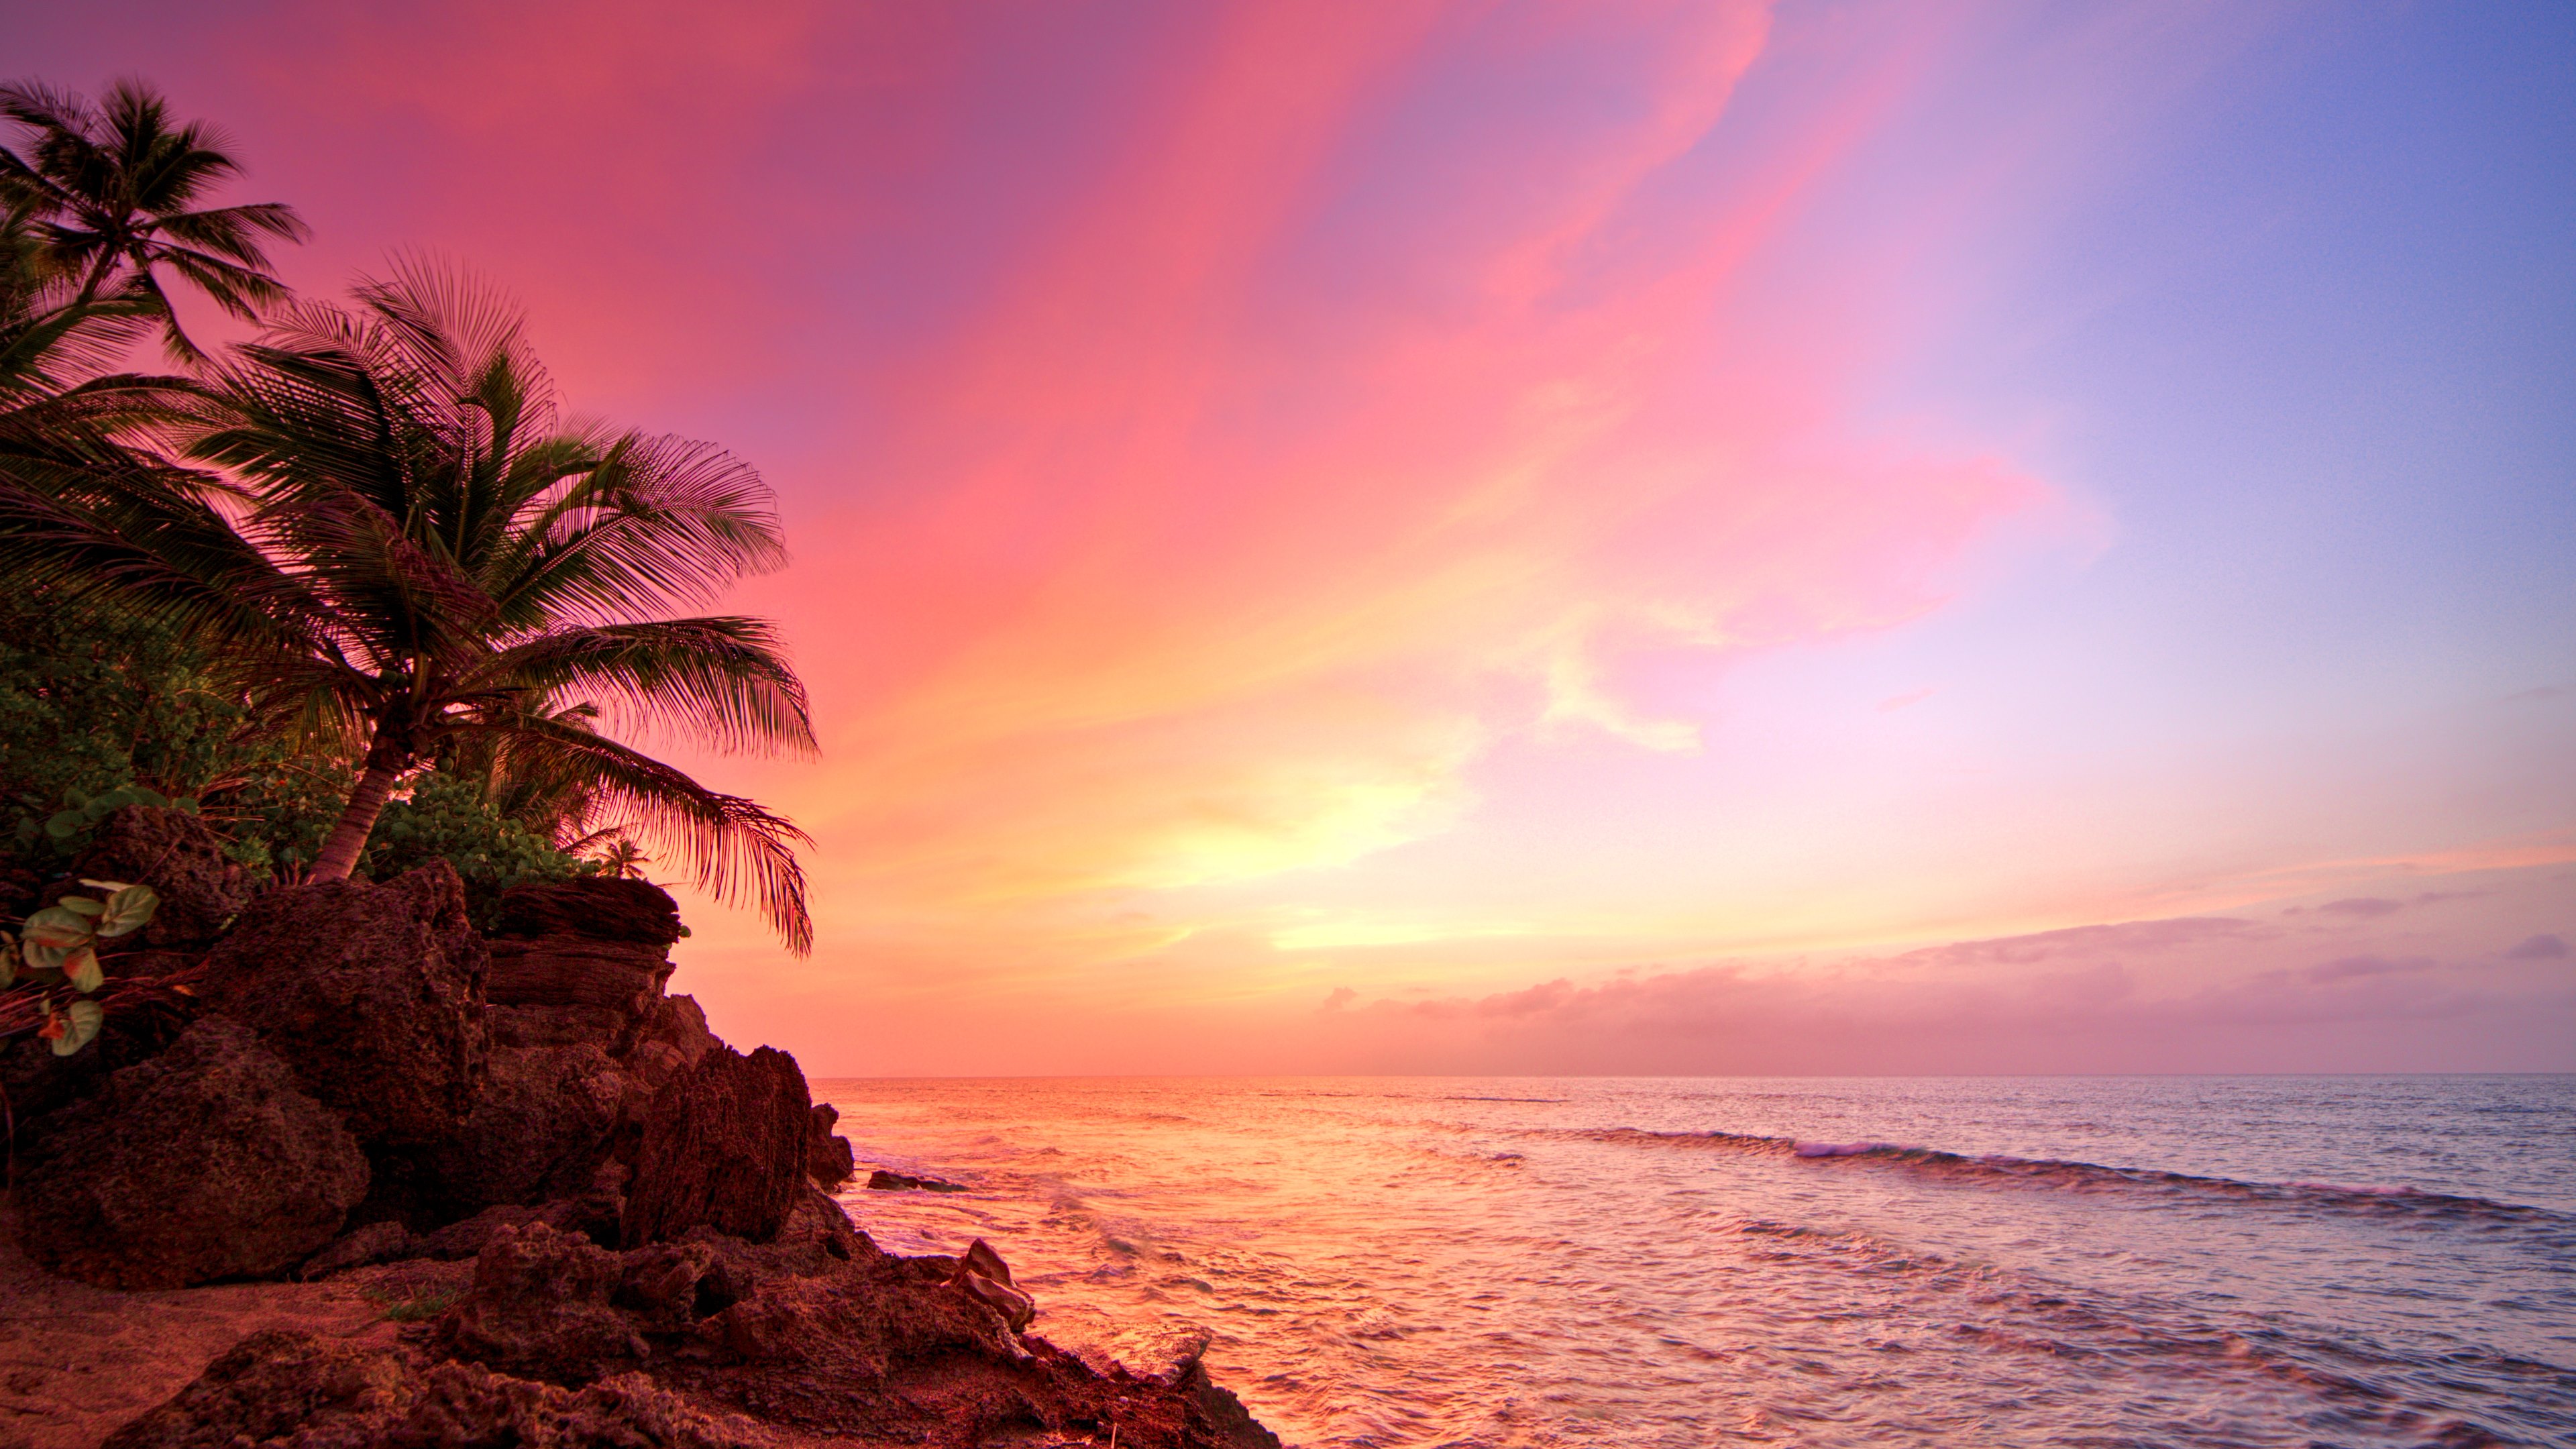 Sunset On Puerto Rican Coast 4k Ultra HD Wallpaper Background